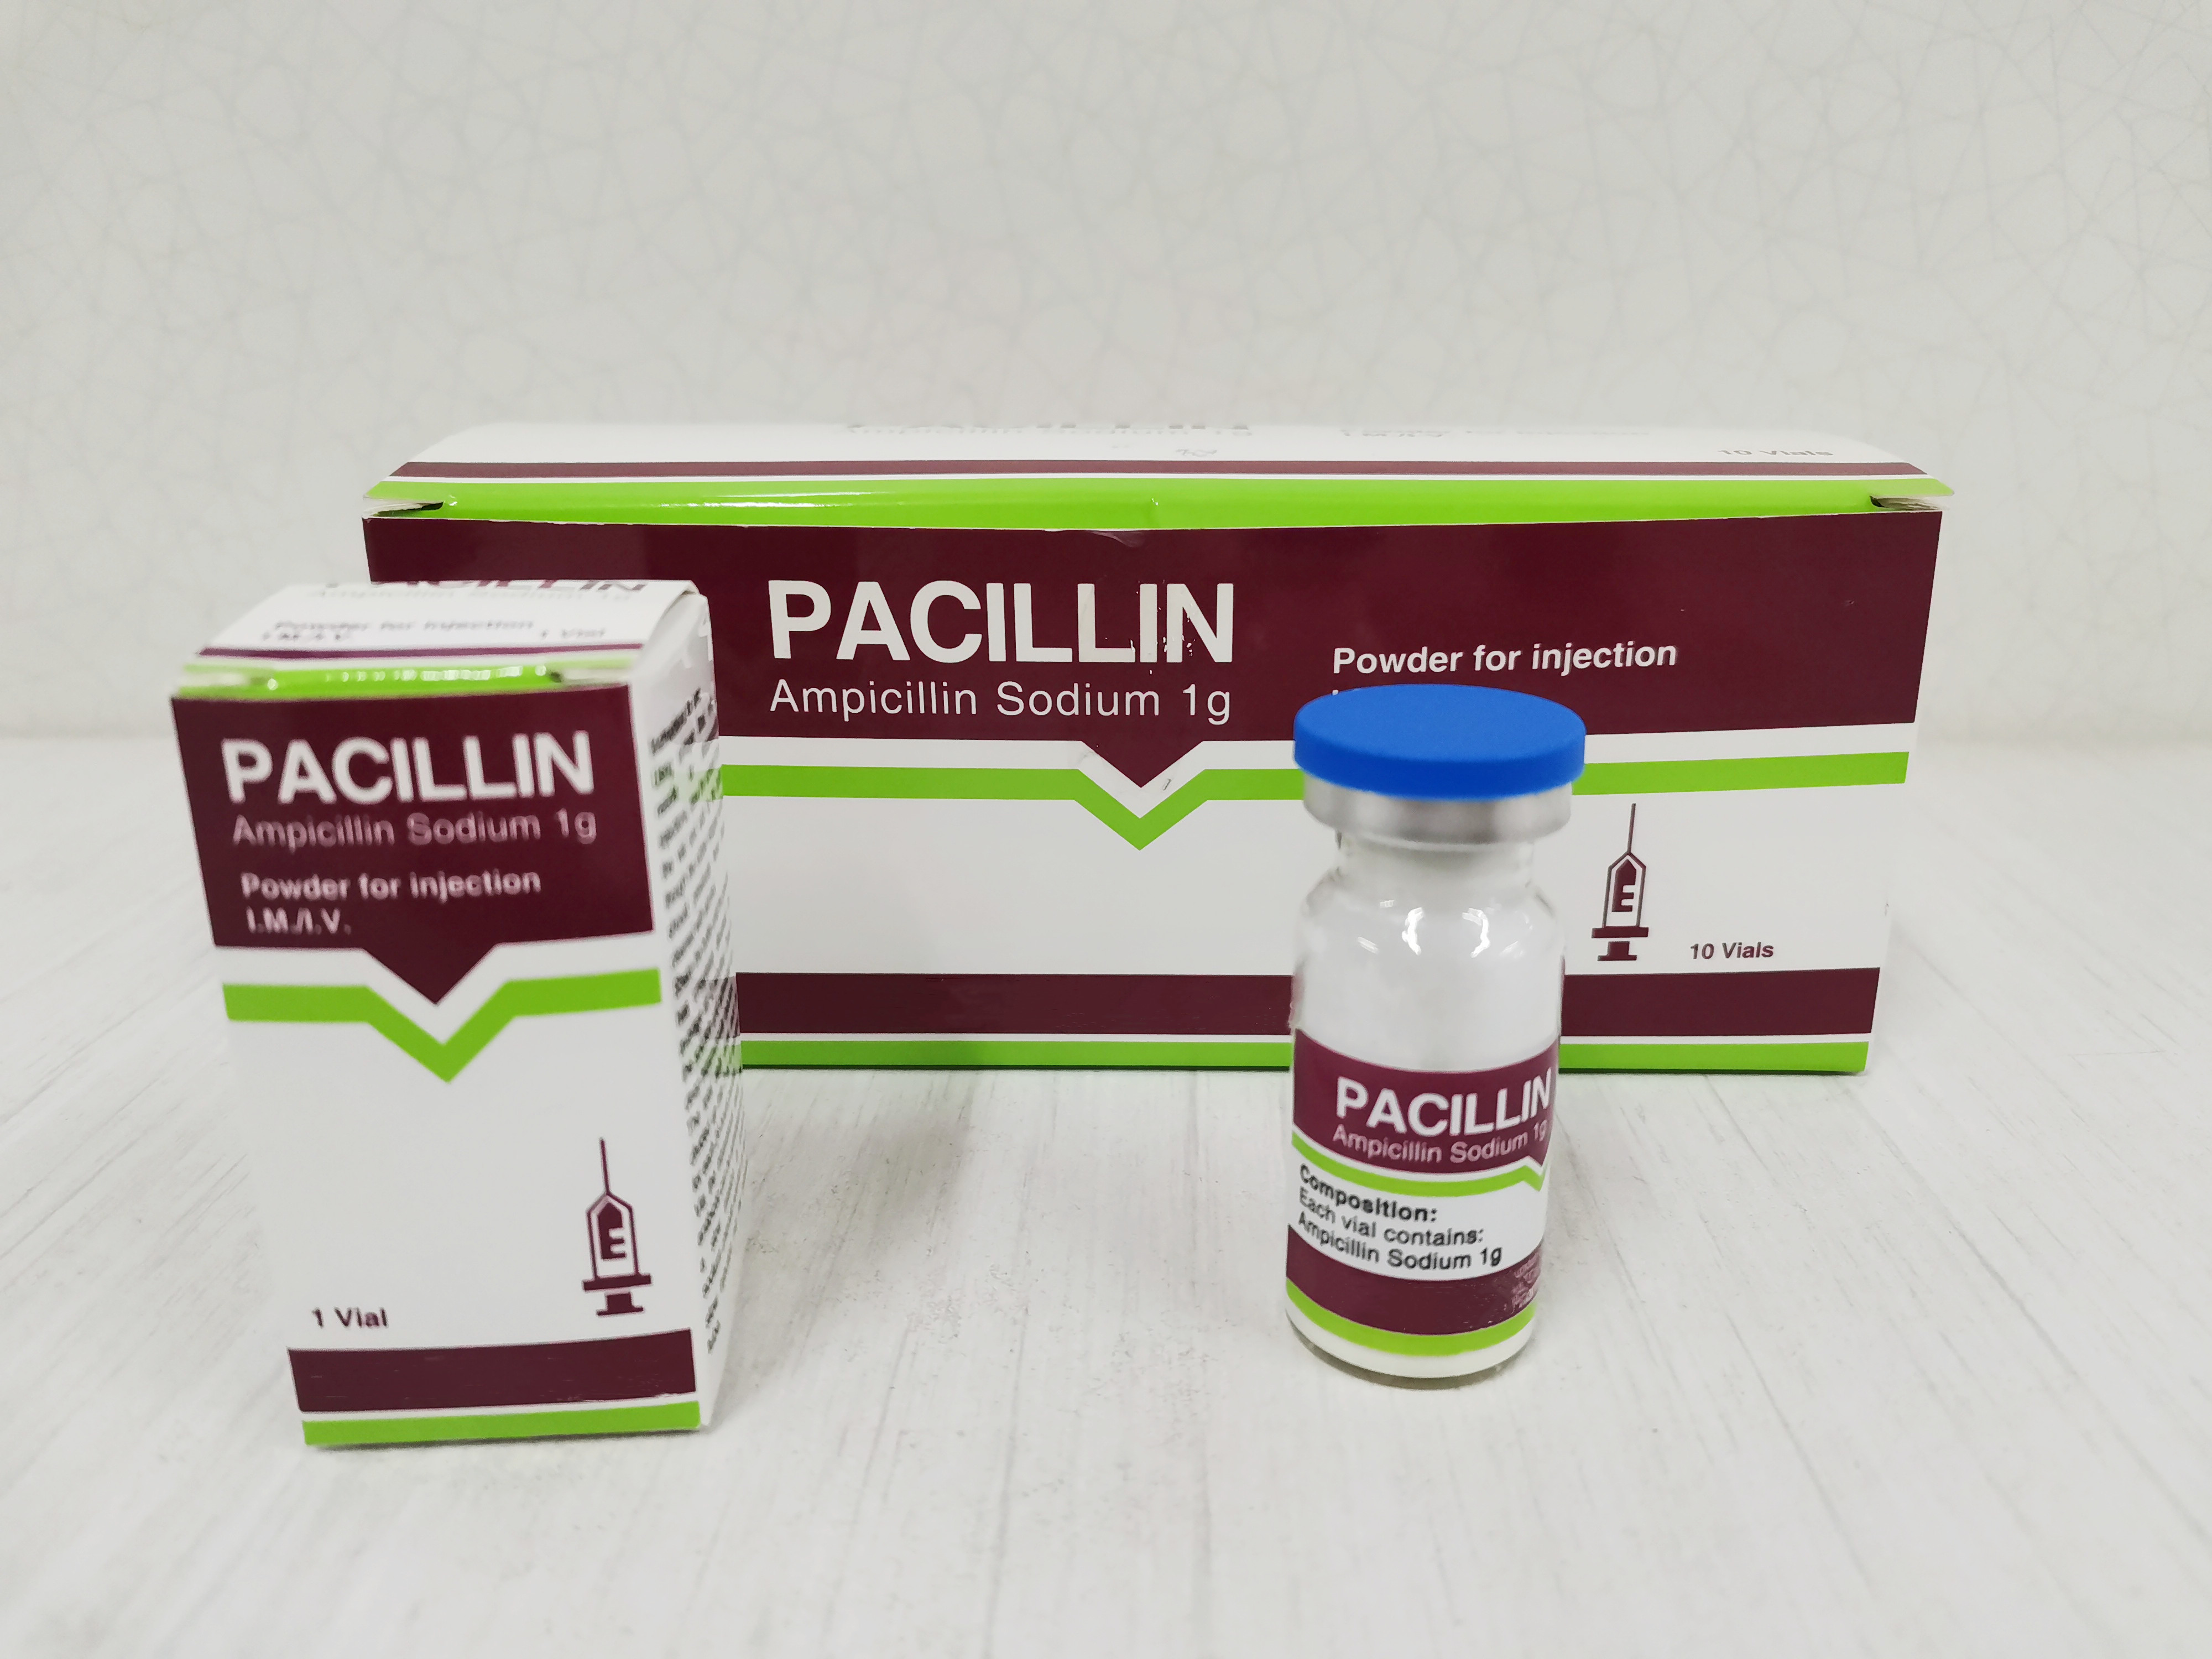 Ampicillin Sodium powder for injection